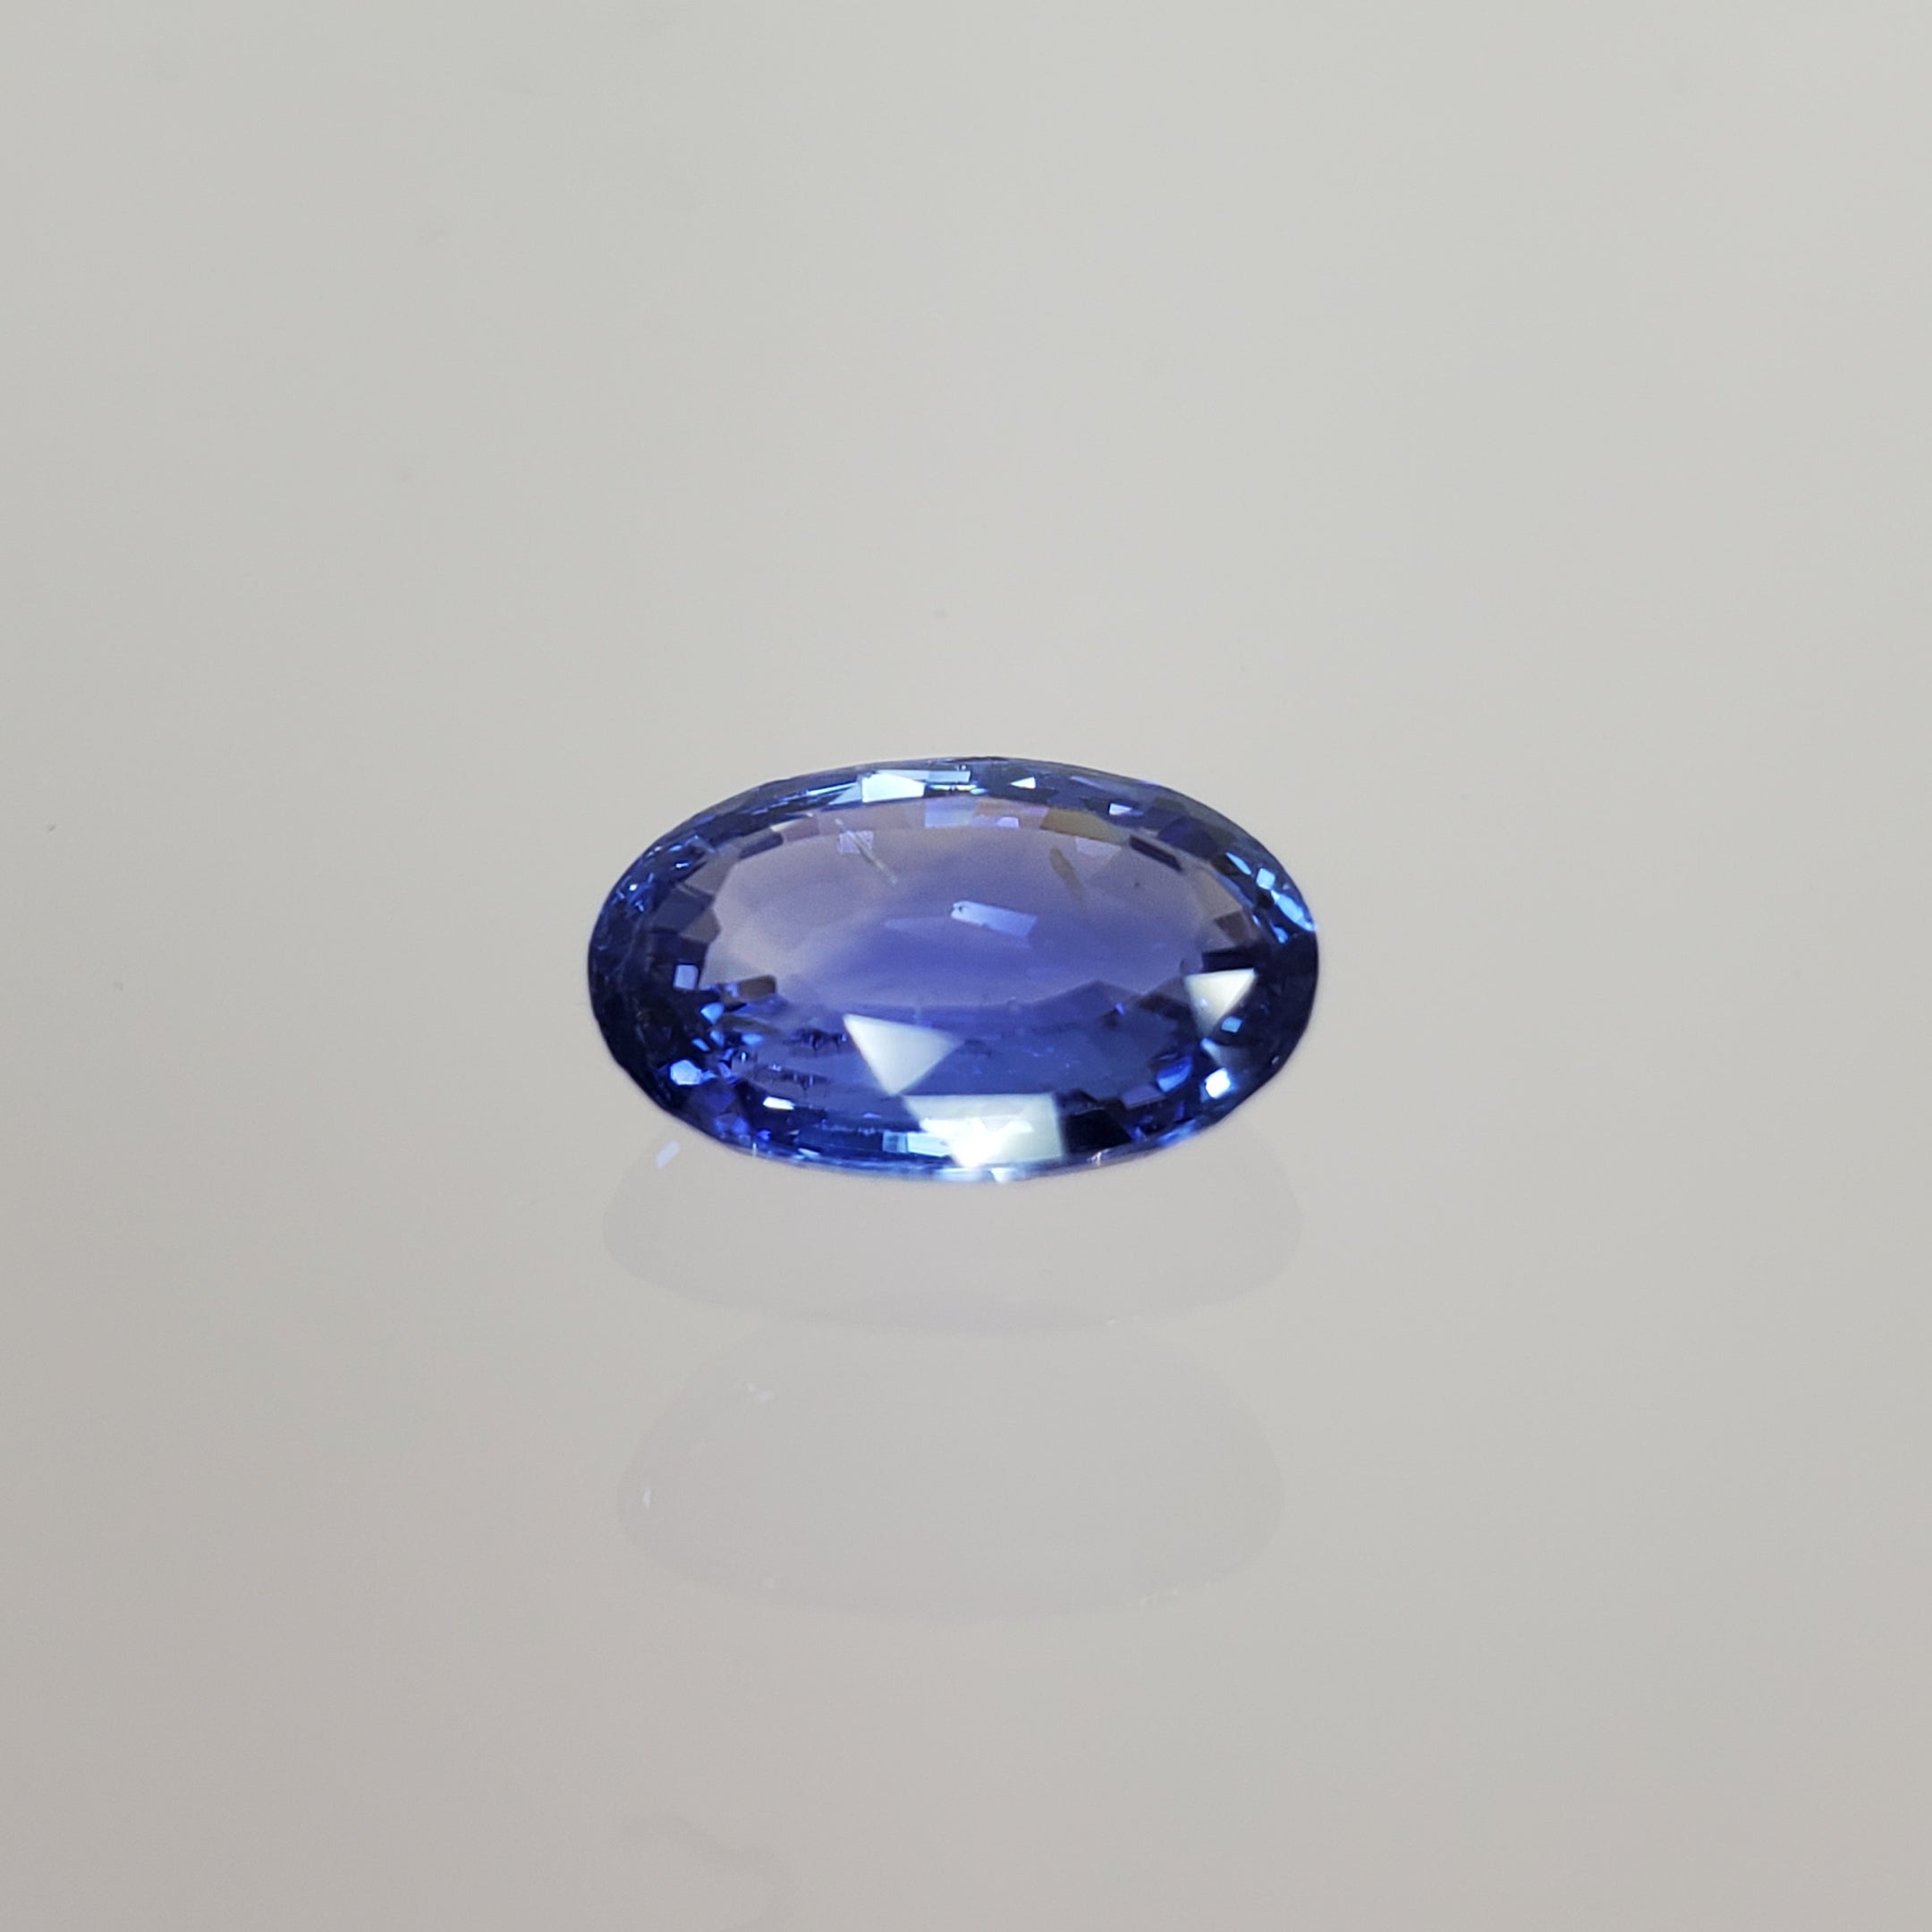 3.80 carat oval-cut blue sapphire loose gemstone